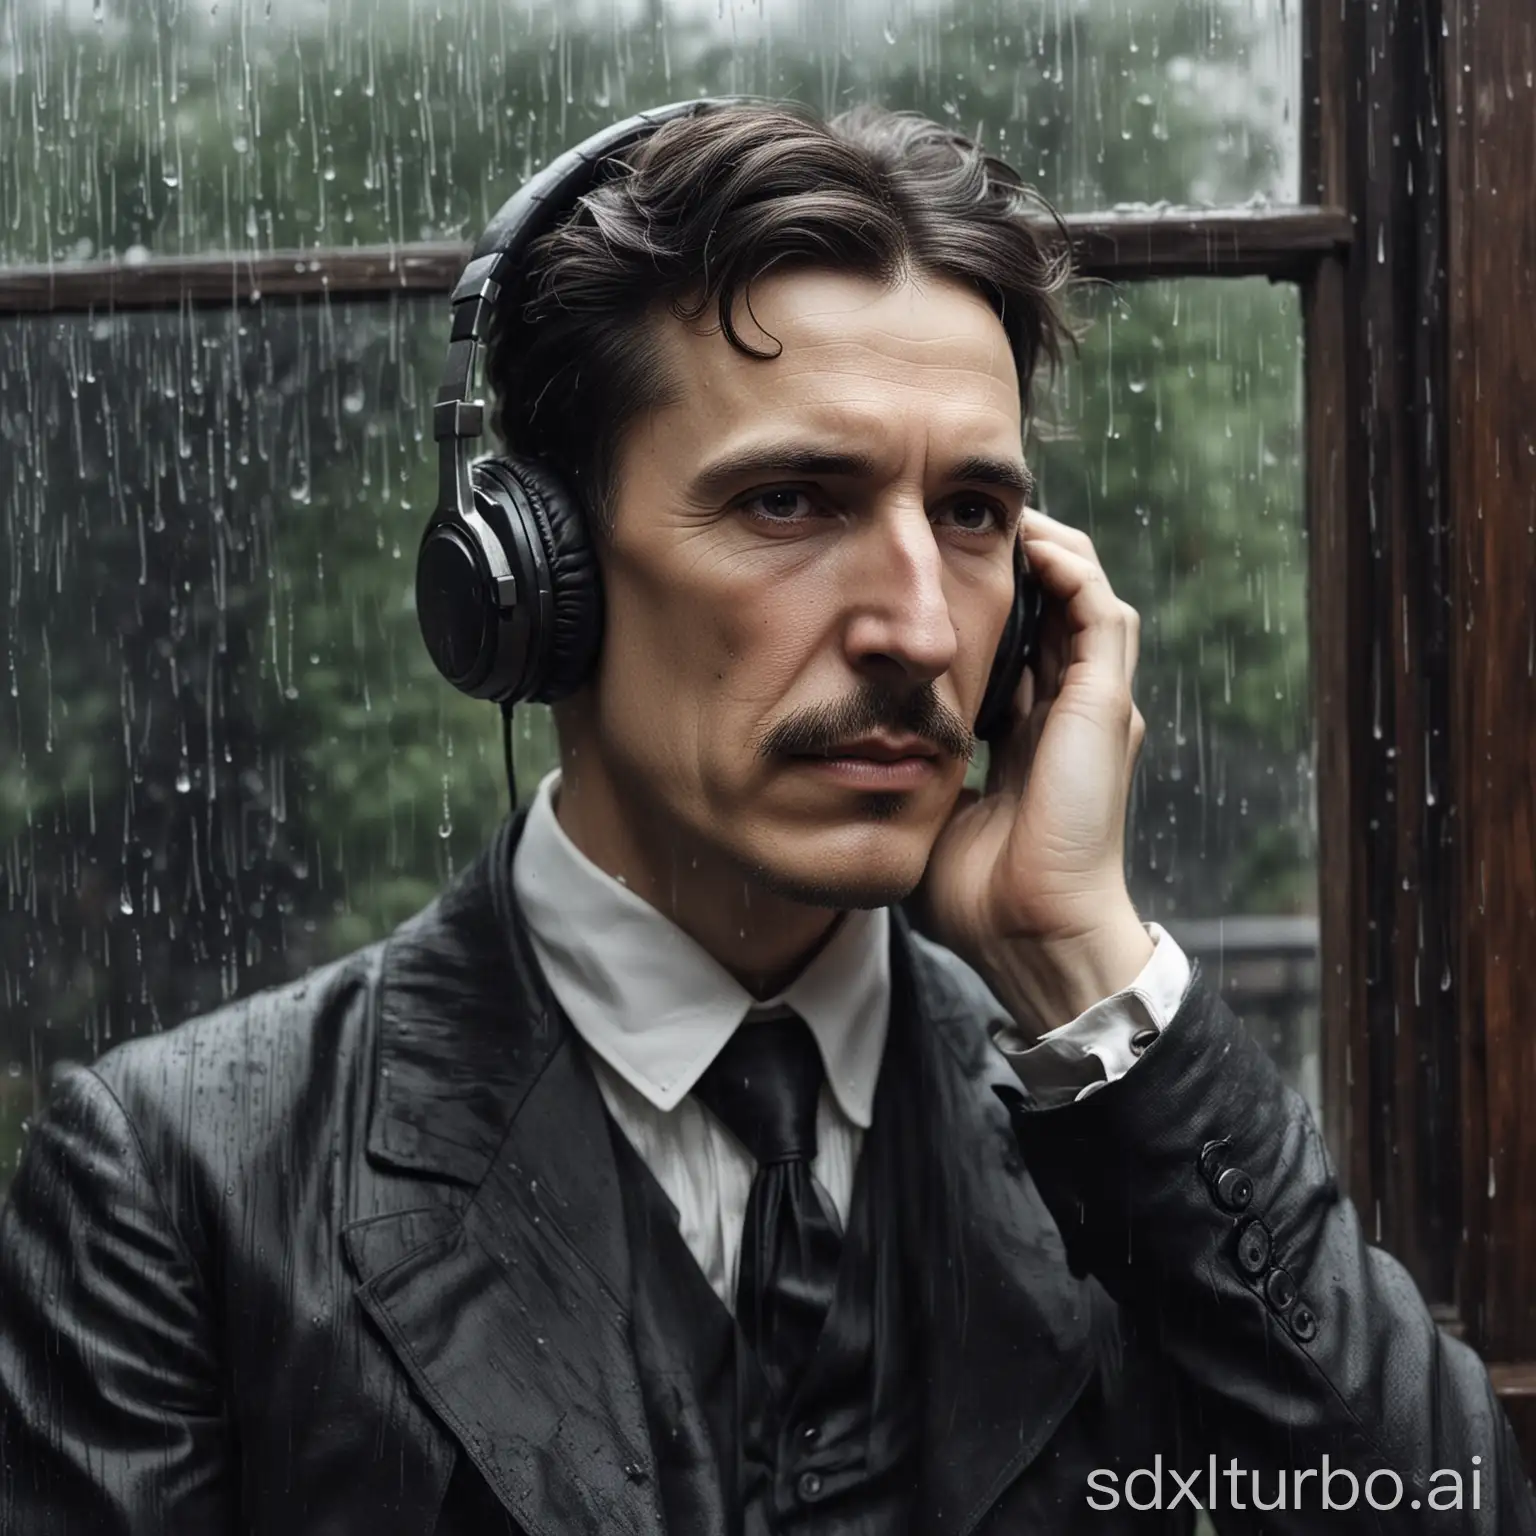 Nikola Tesla sad wearing headphones while it rains in window